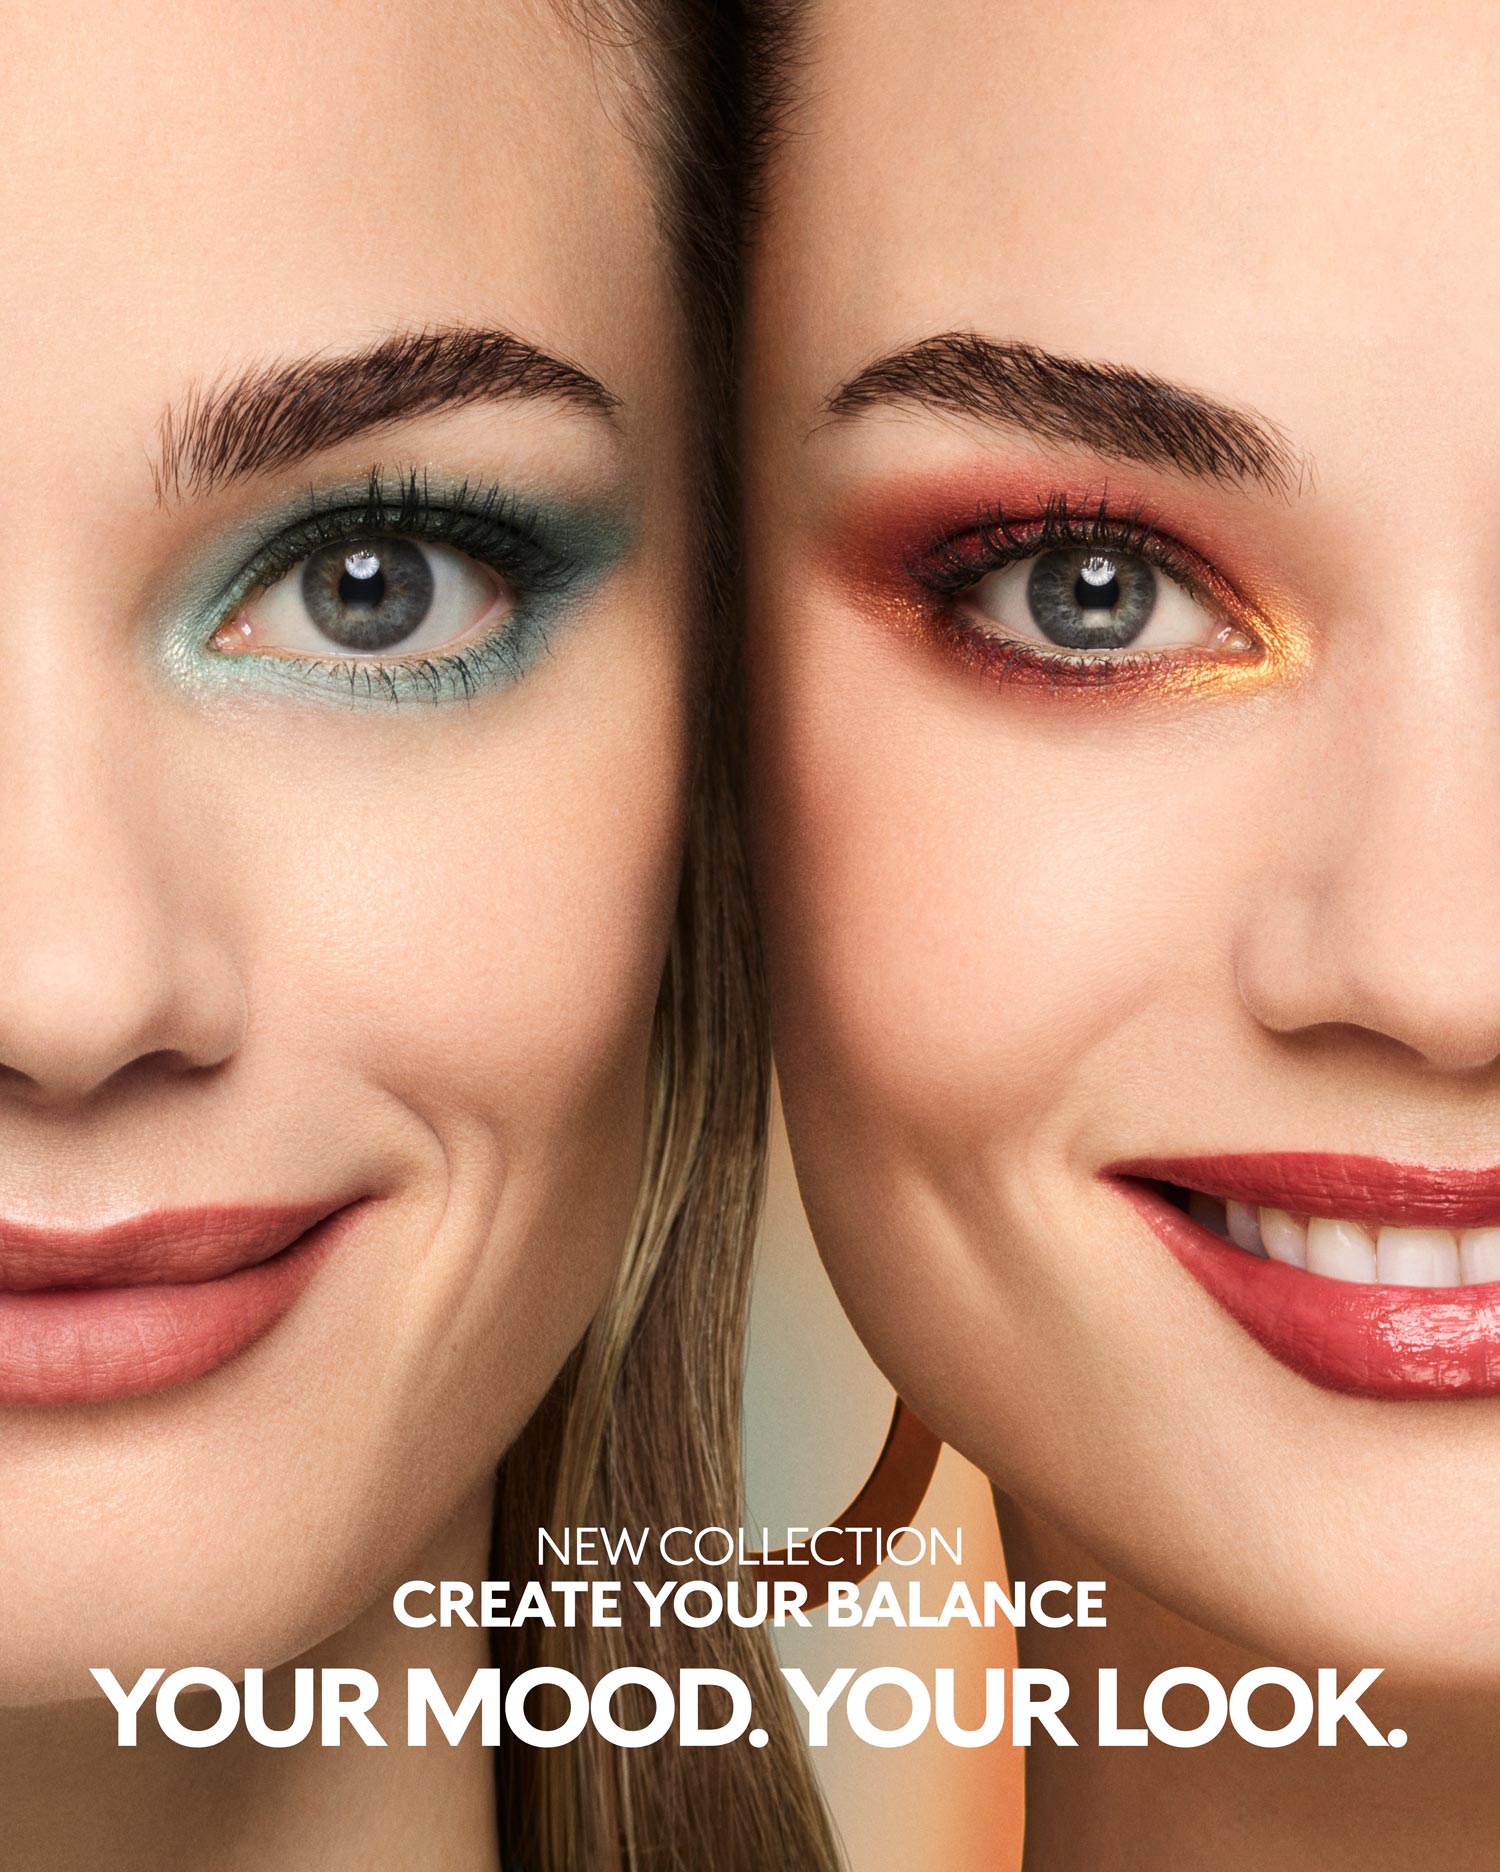 Kiko Milano Create Your Balance make up campaign 2023